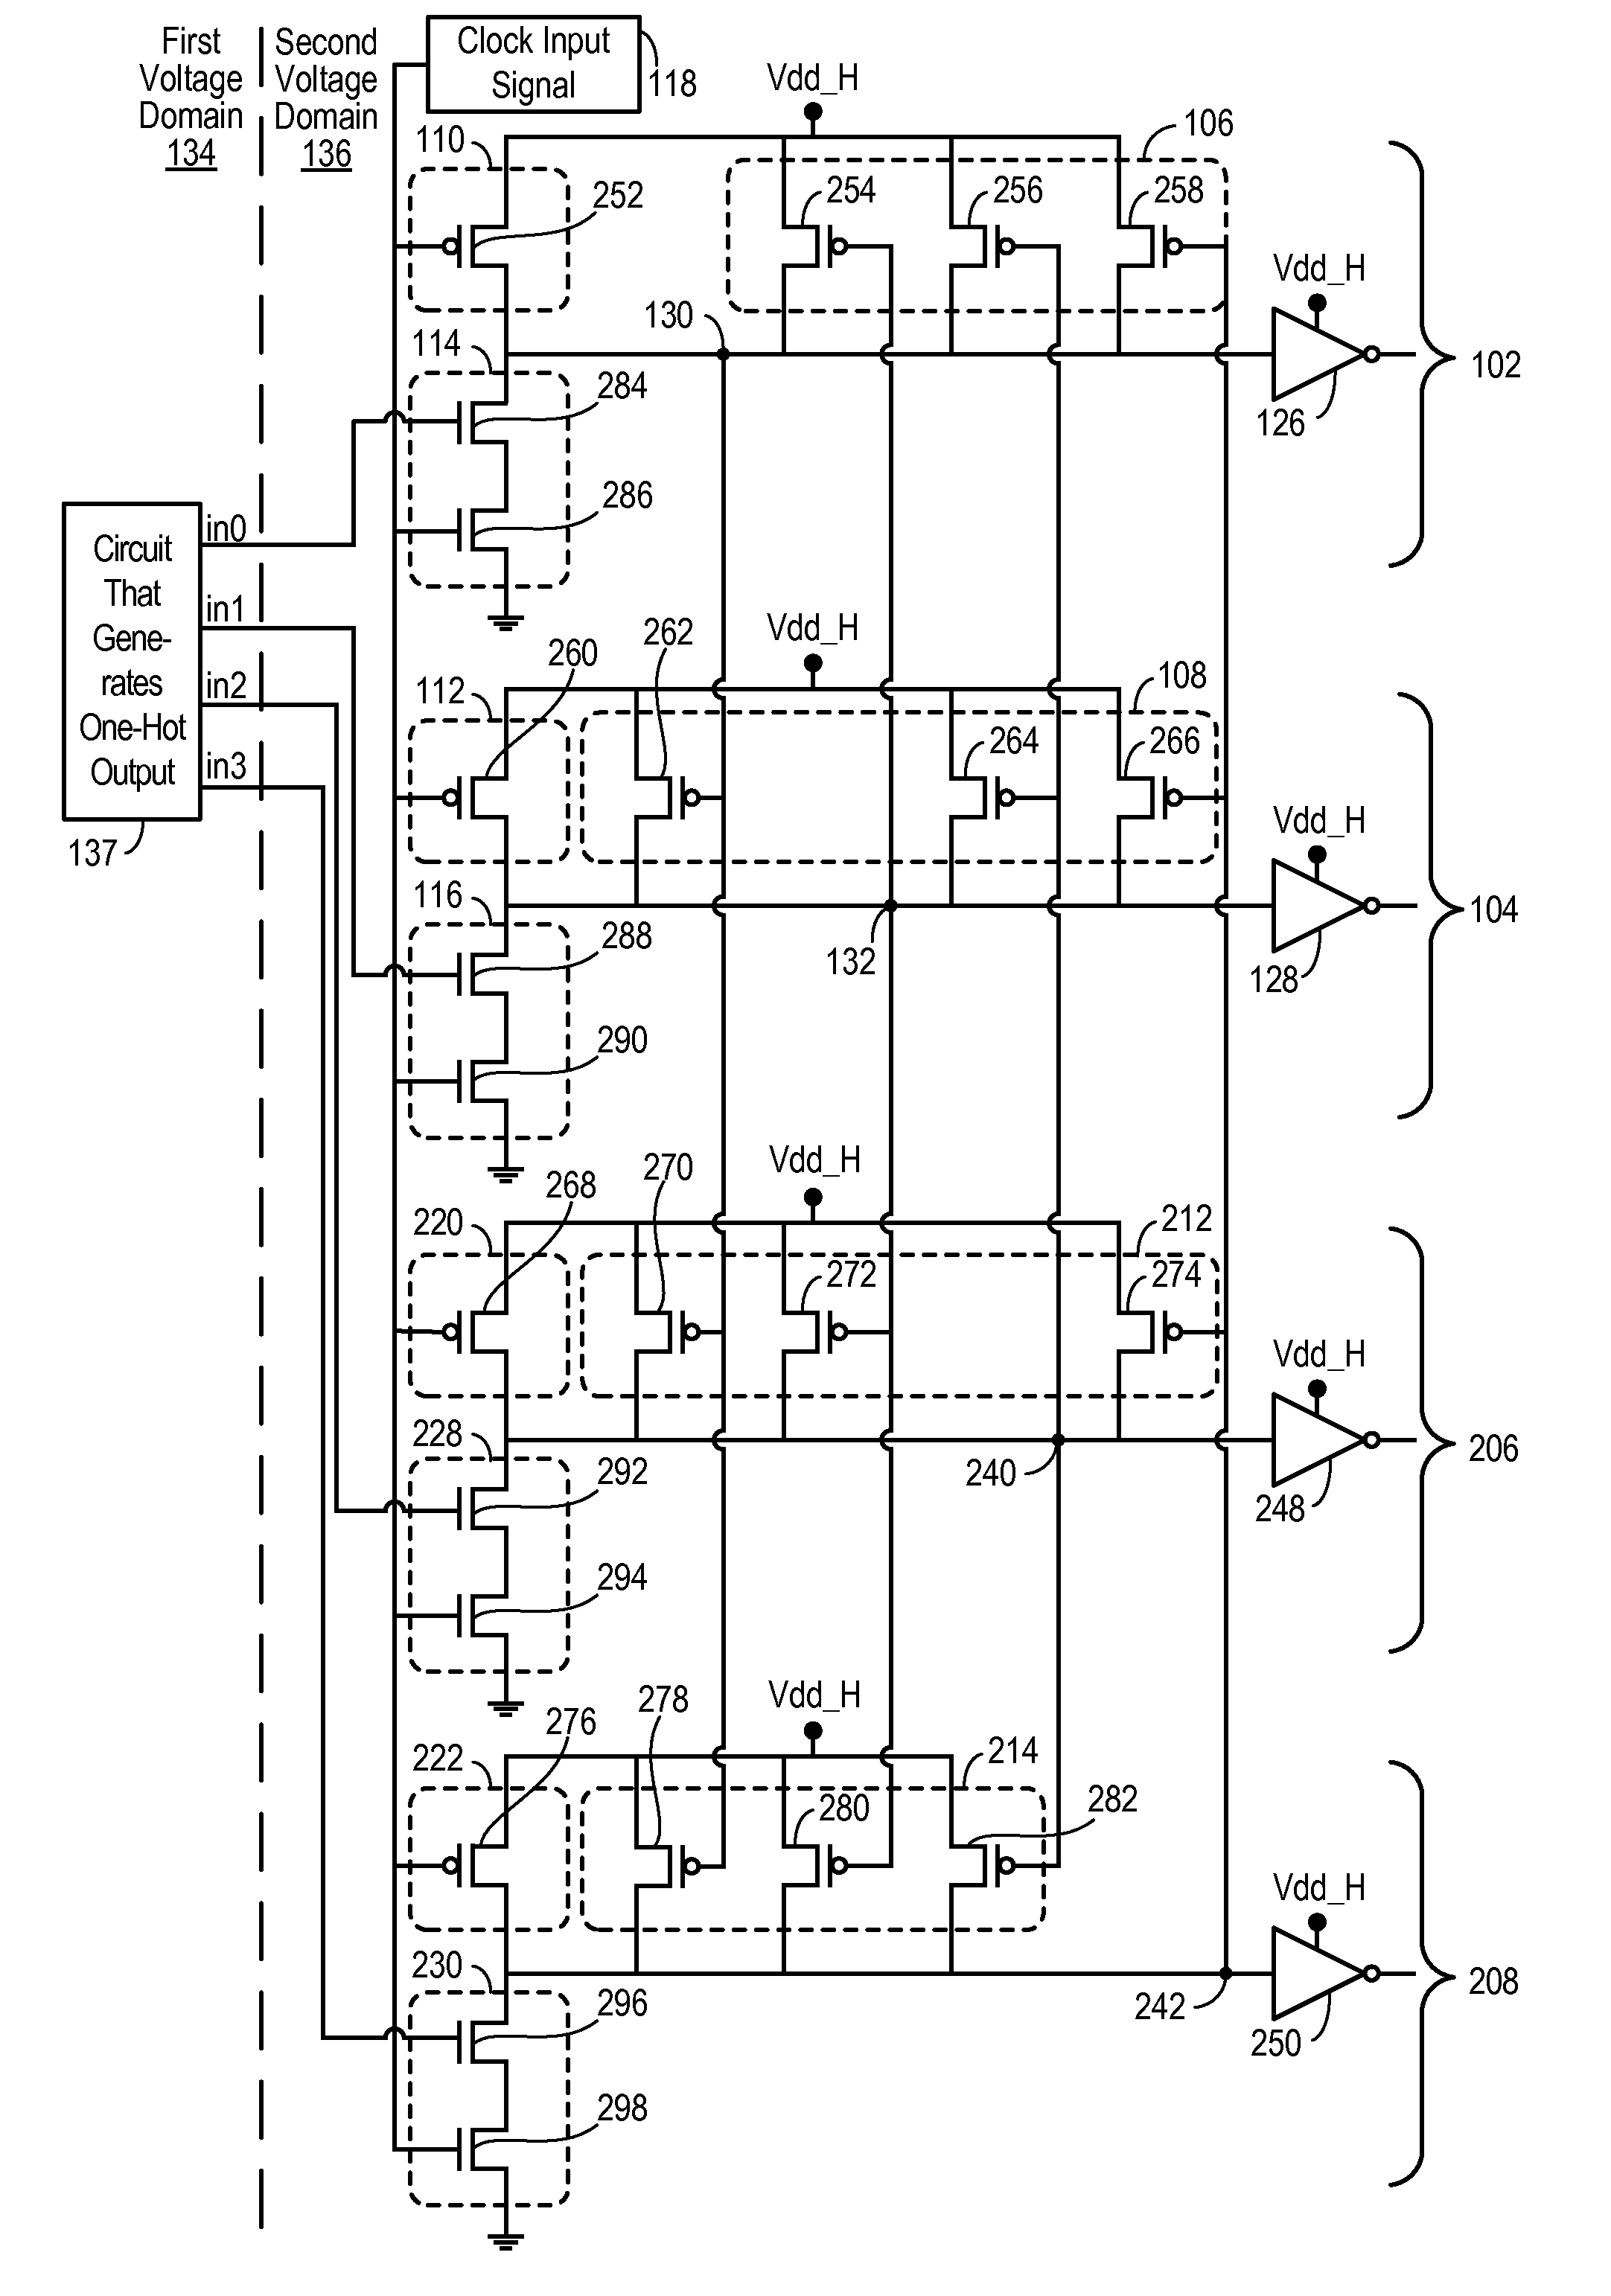 Multi-voltage level, multi-dynamic circuit structure device